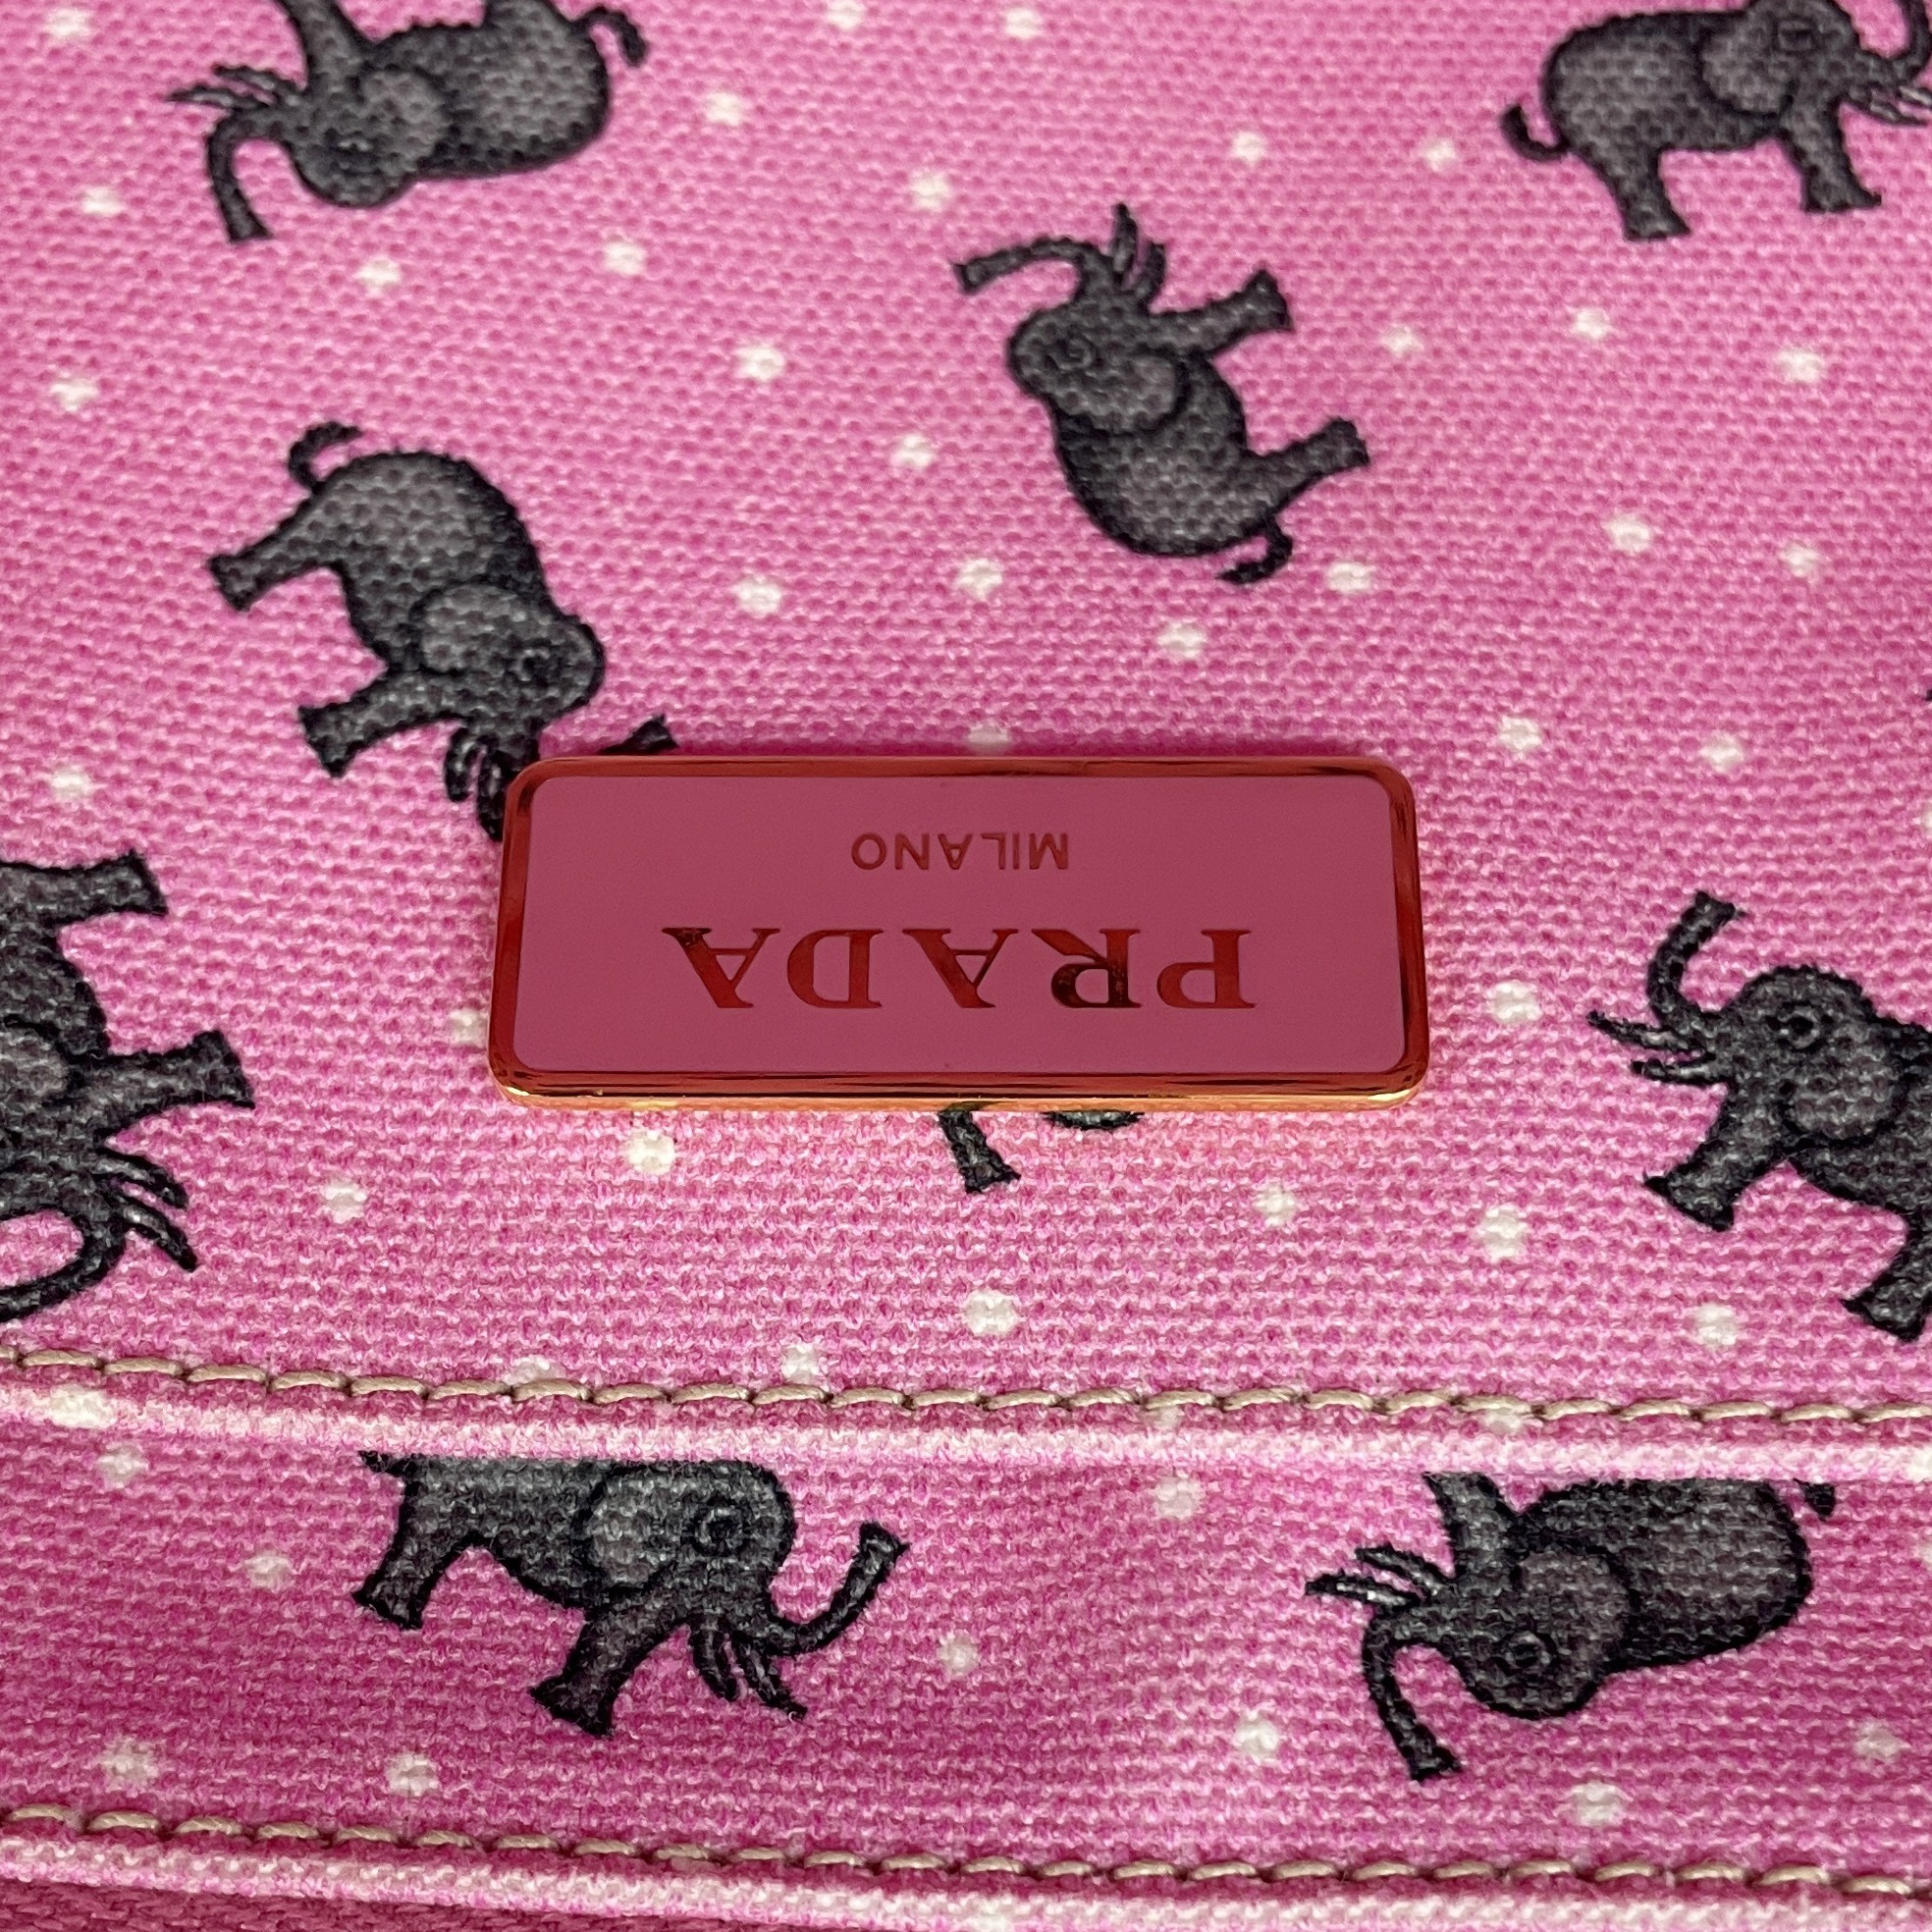 Prada Pink Canvas Elephant Printed Canapa Tote Bag